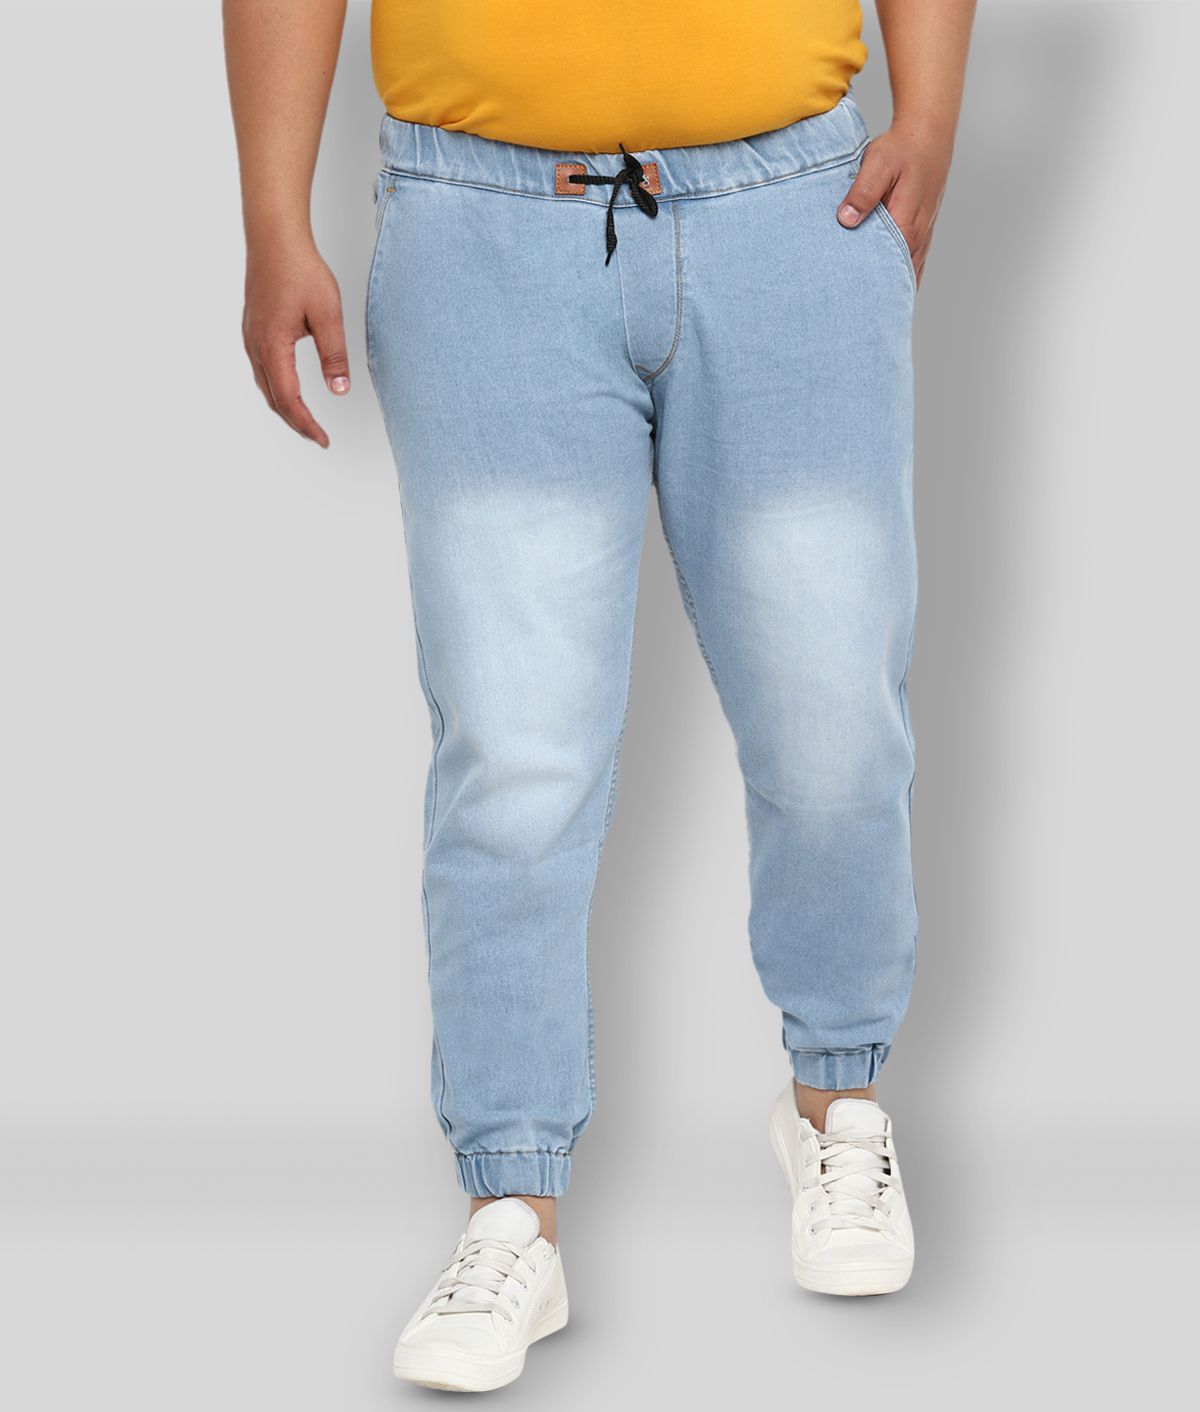 Urbano Plus - Light Blue Cotton Blend Regular Fit Men's Jeans ( Pack of 1 )